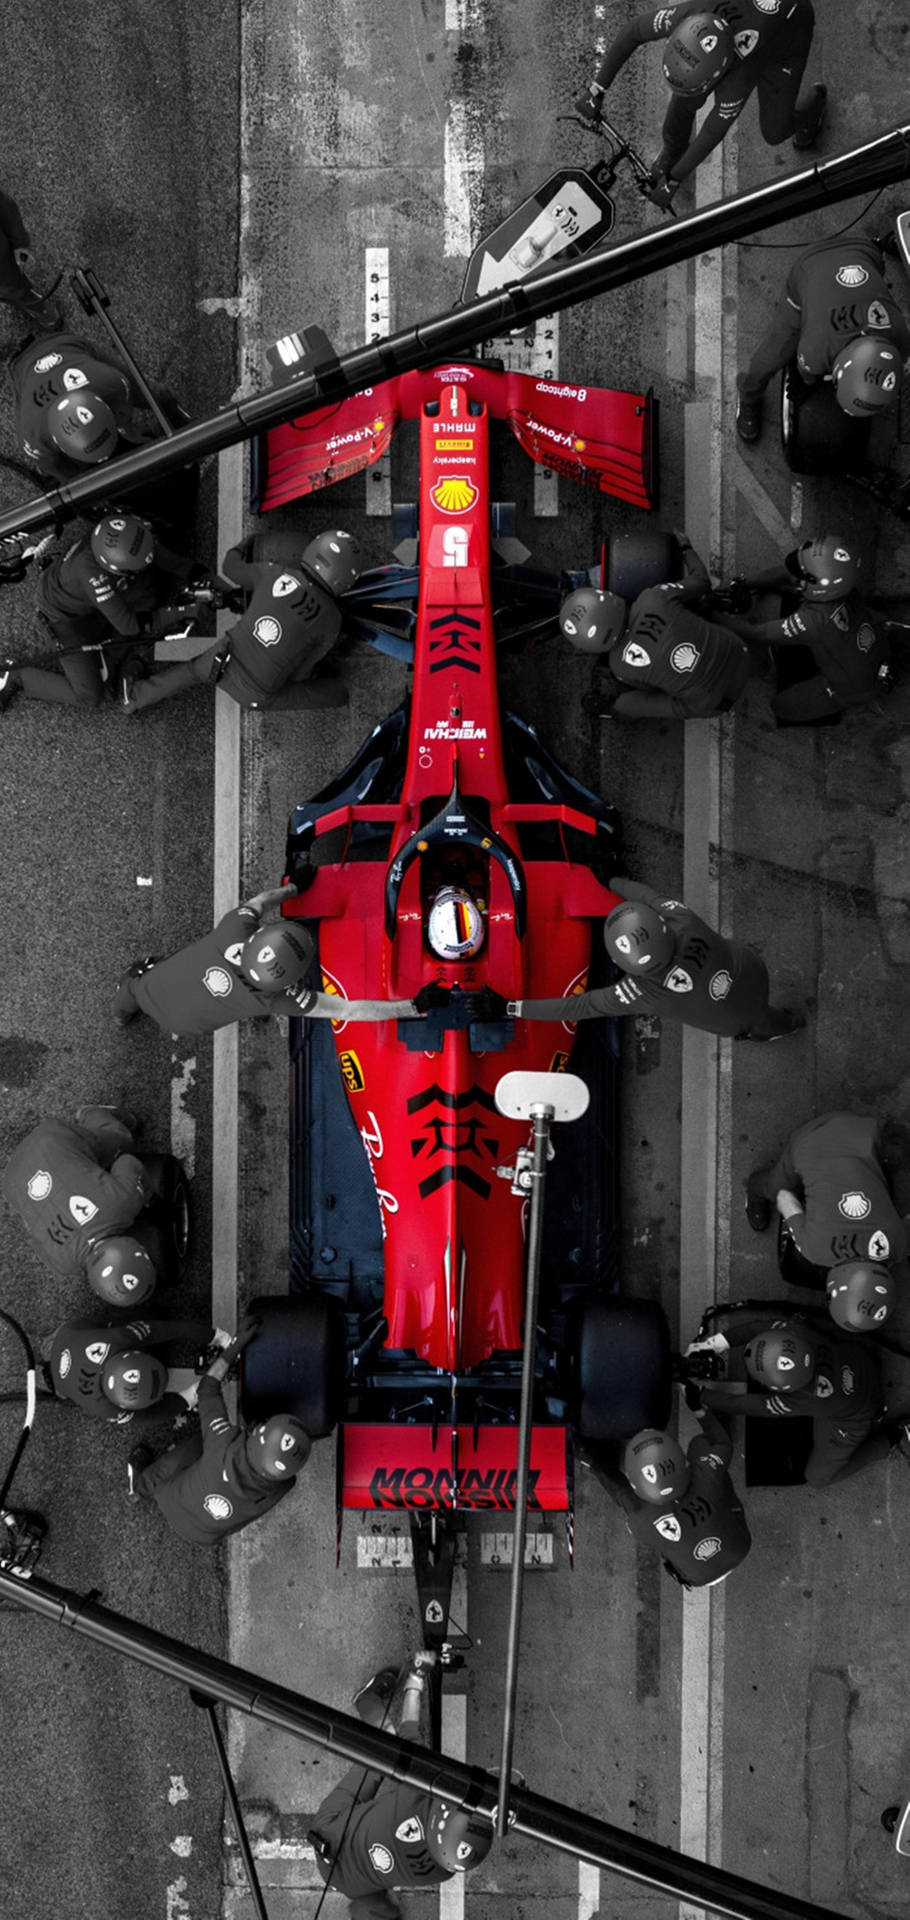 Sleek F1 Phone With Red Ferrari Theme - Top View